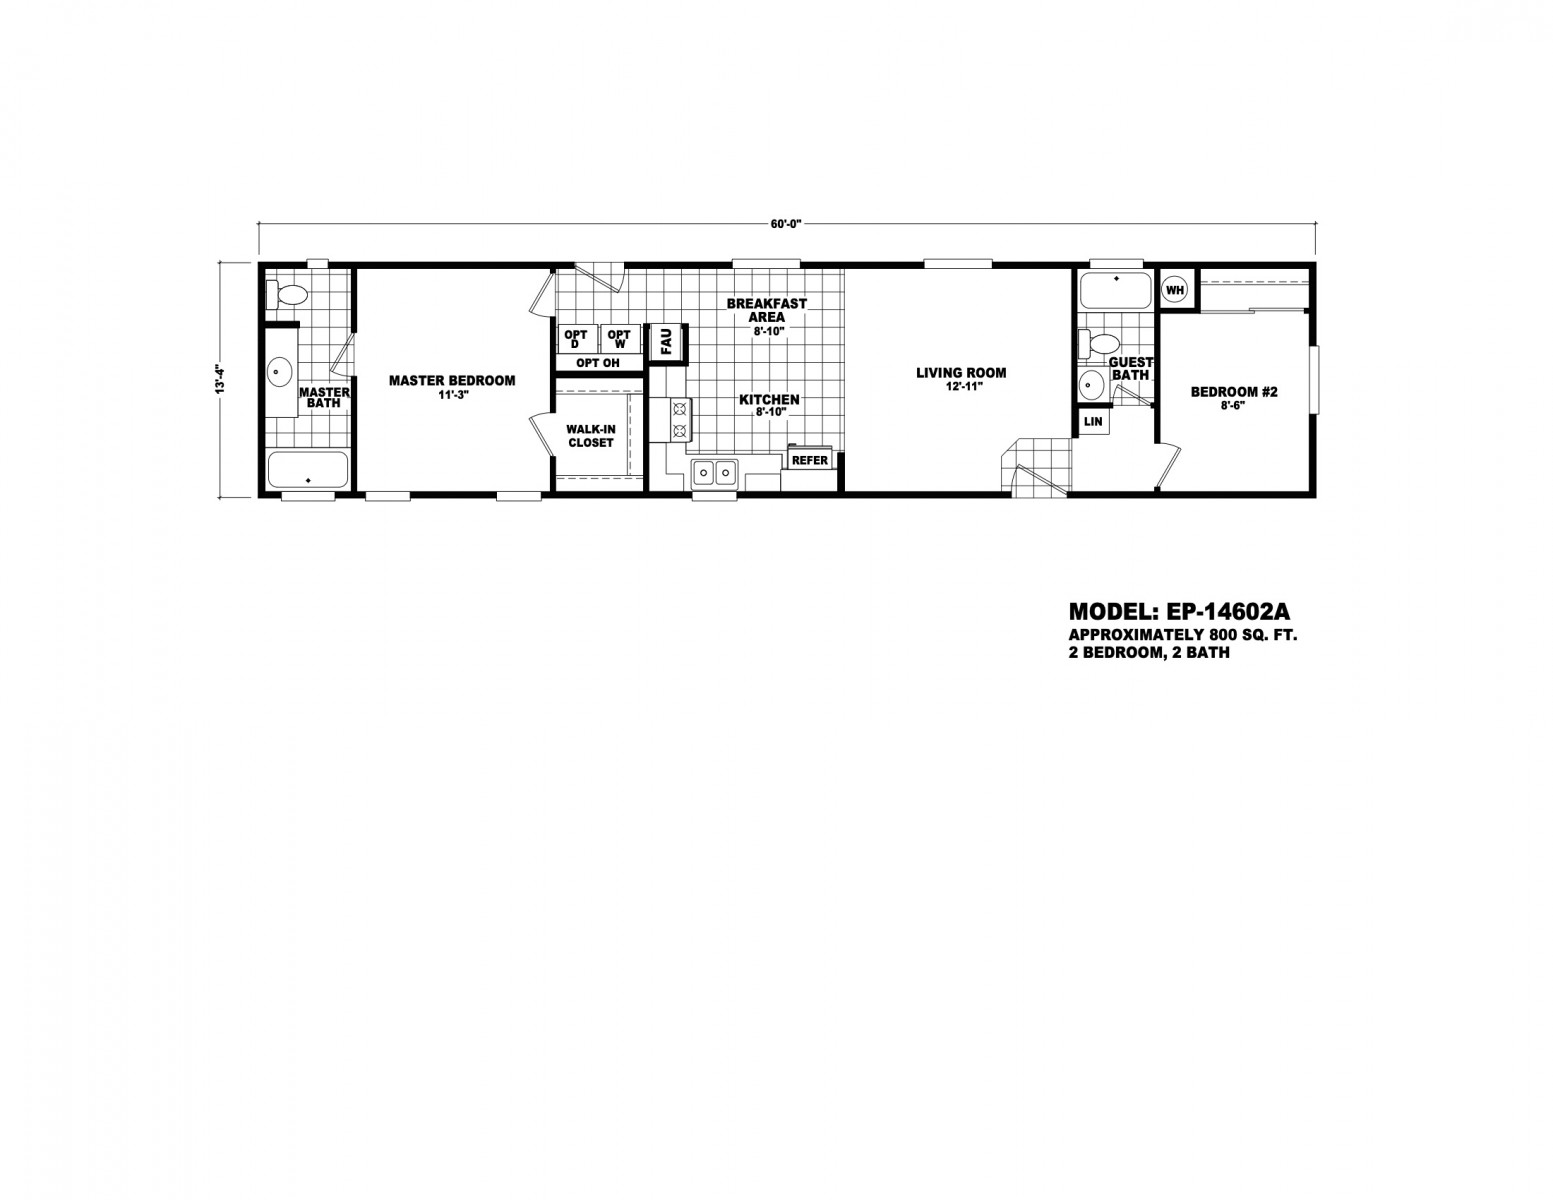 Homes Direct Modular Homes - Model EP14602A - Floorplan